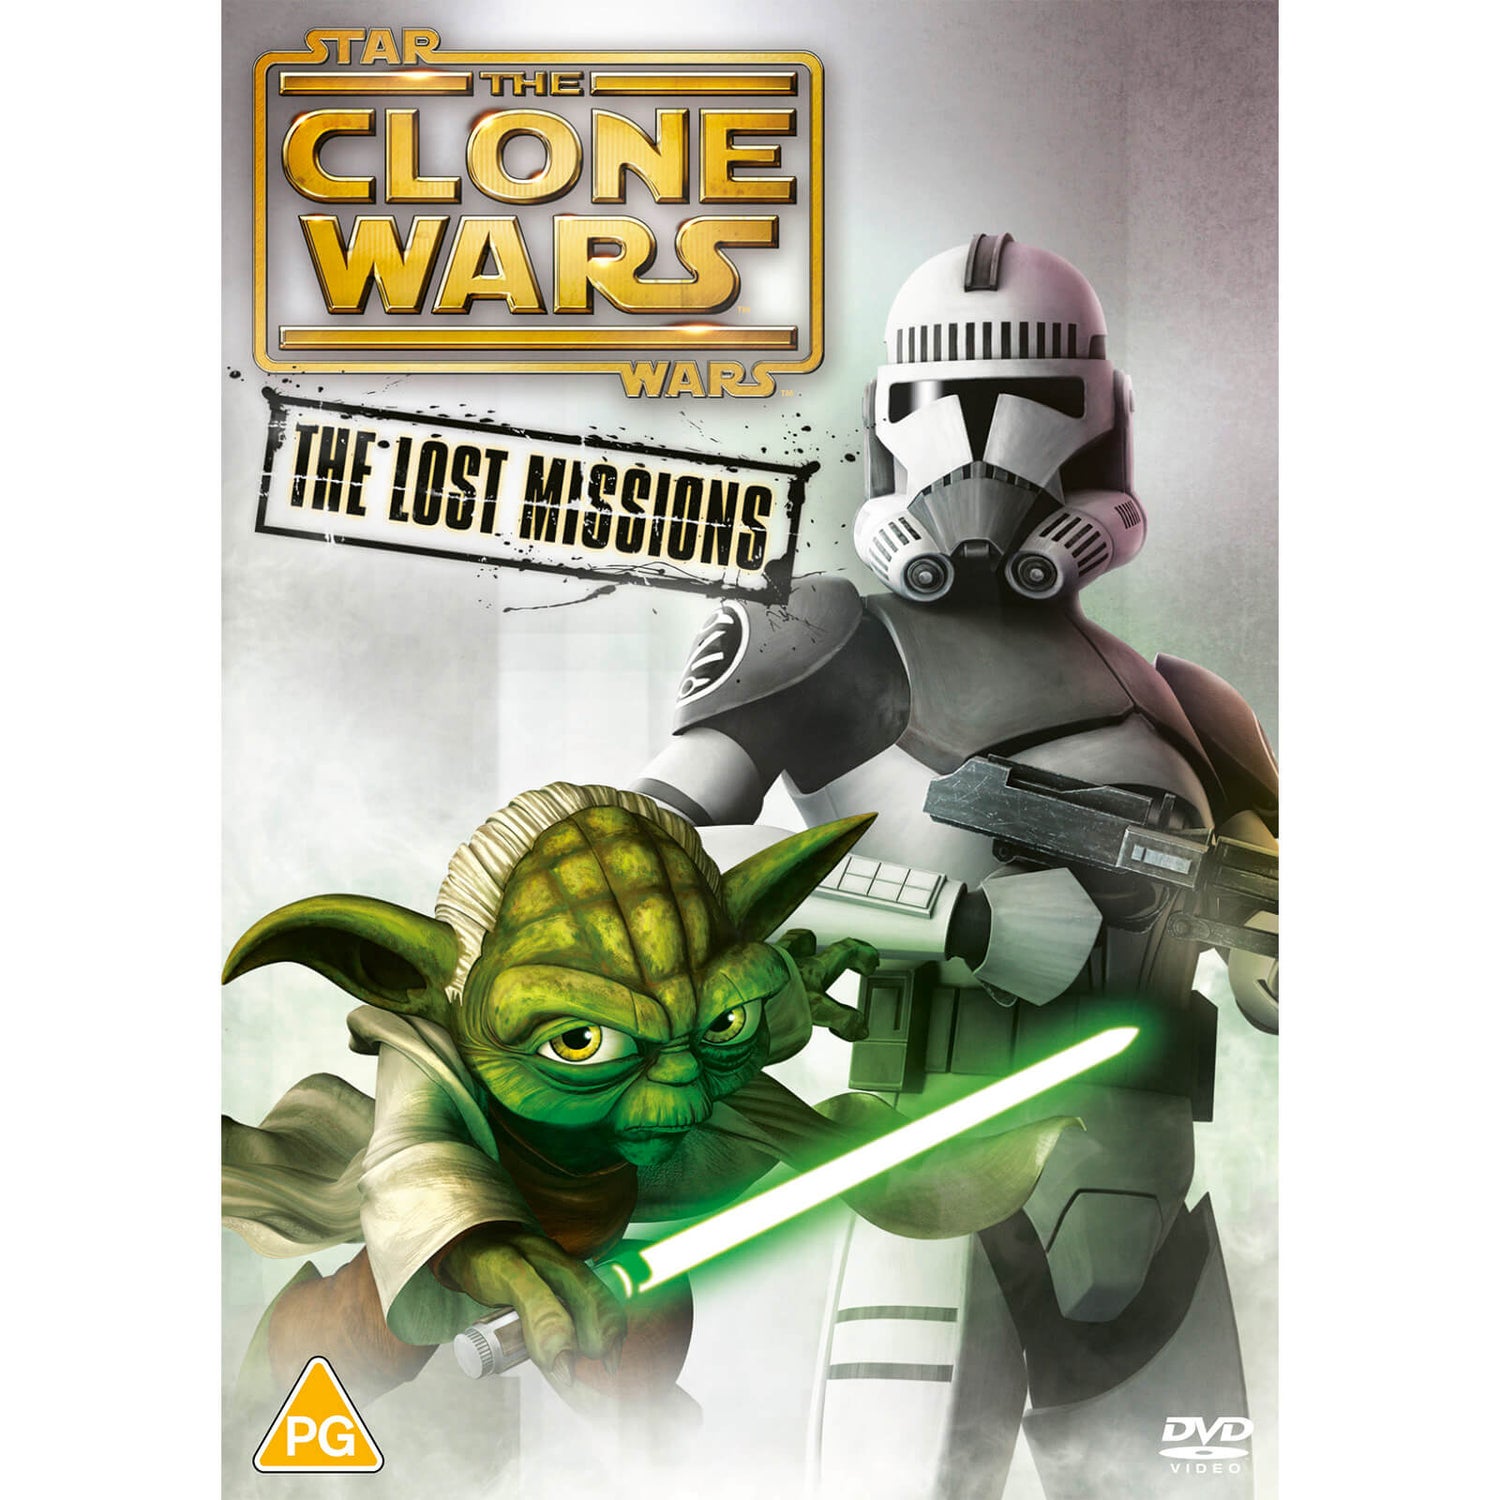 Clone Wars Season 6: The Lost Missions